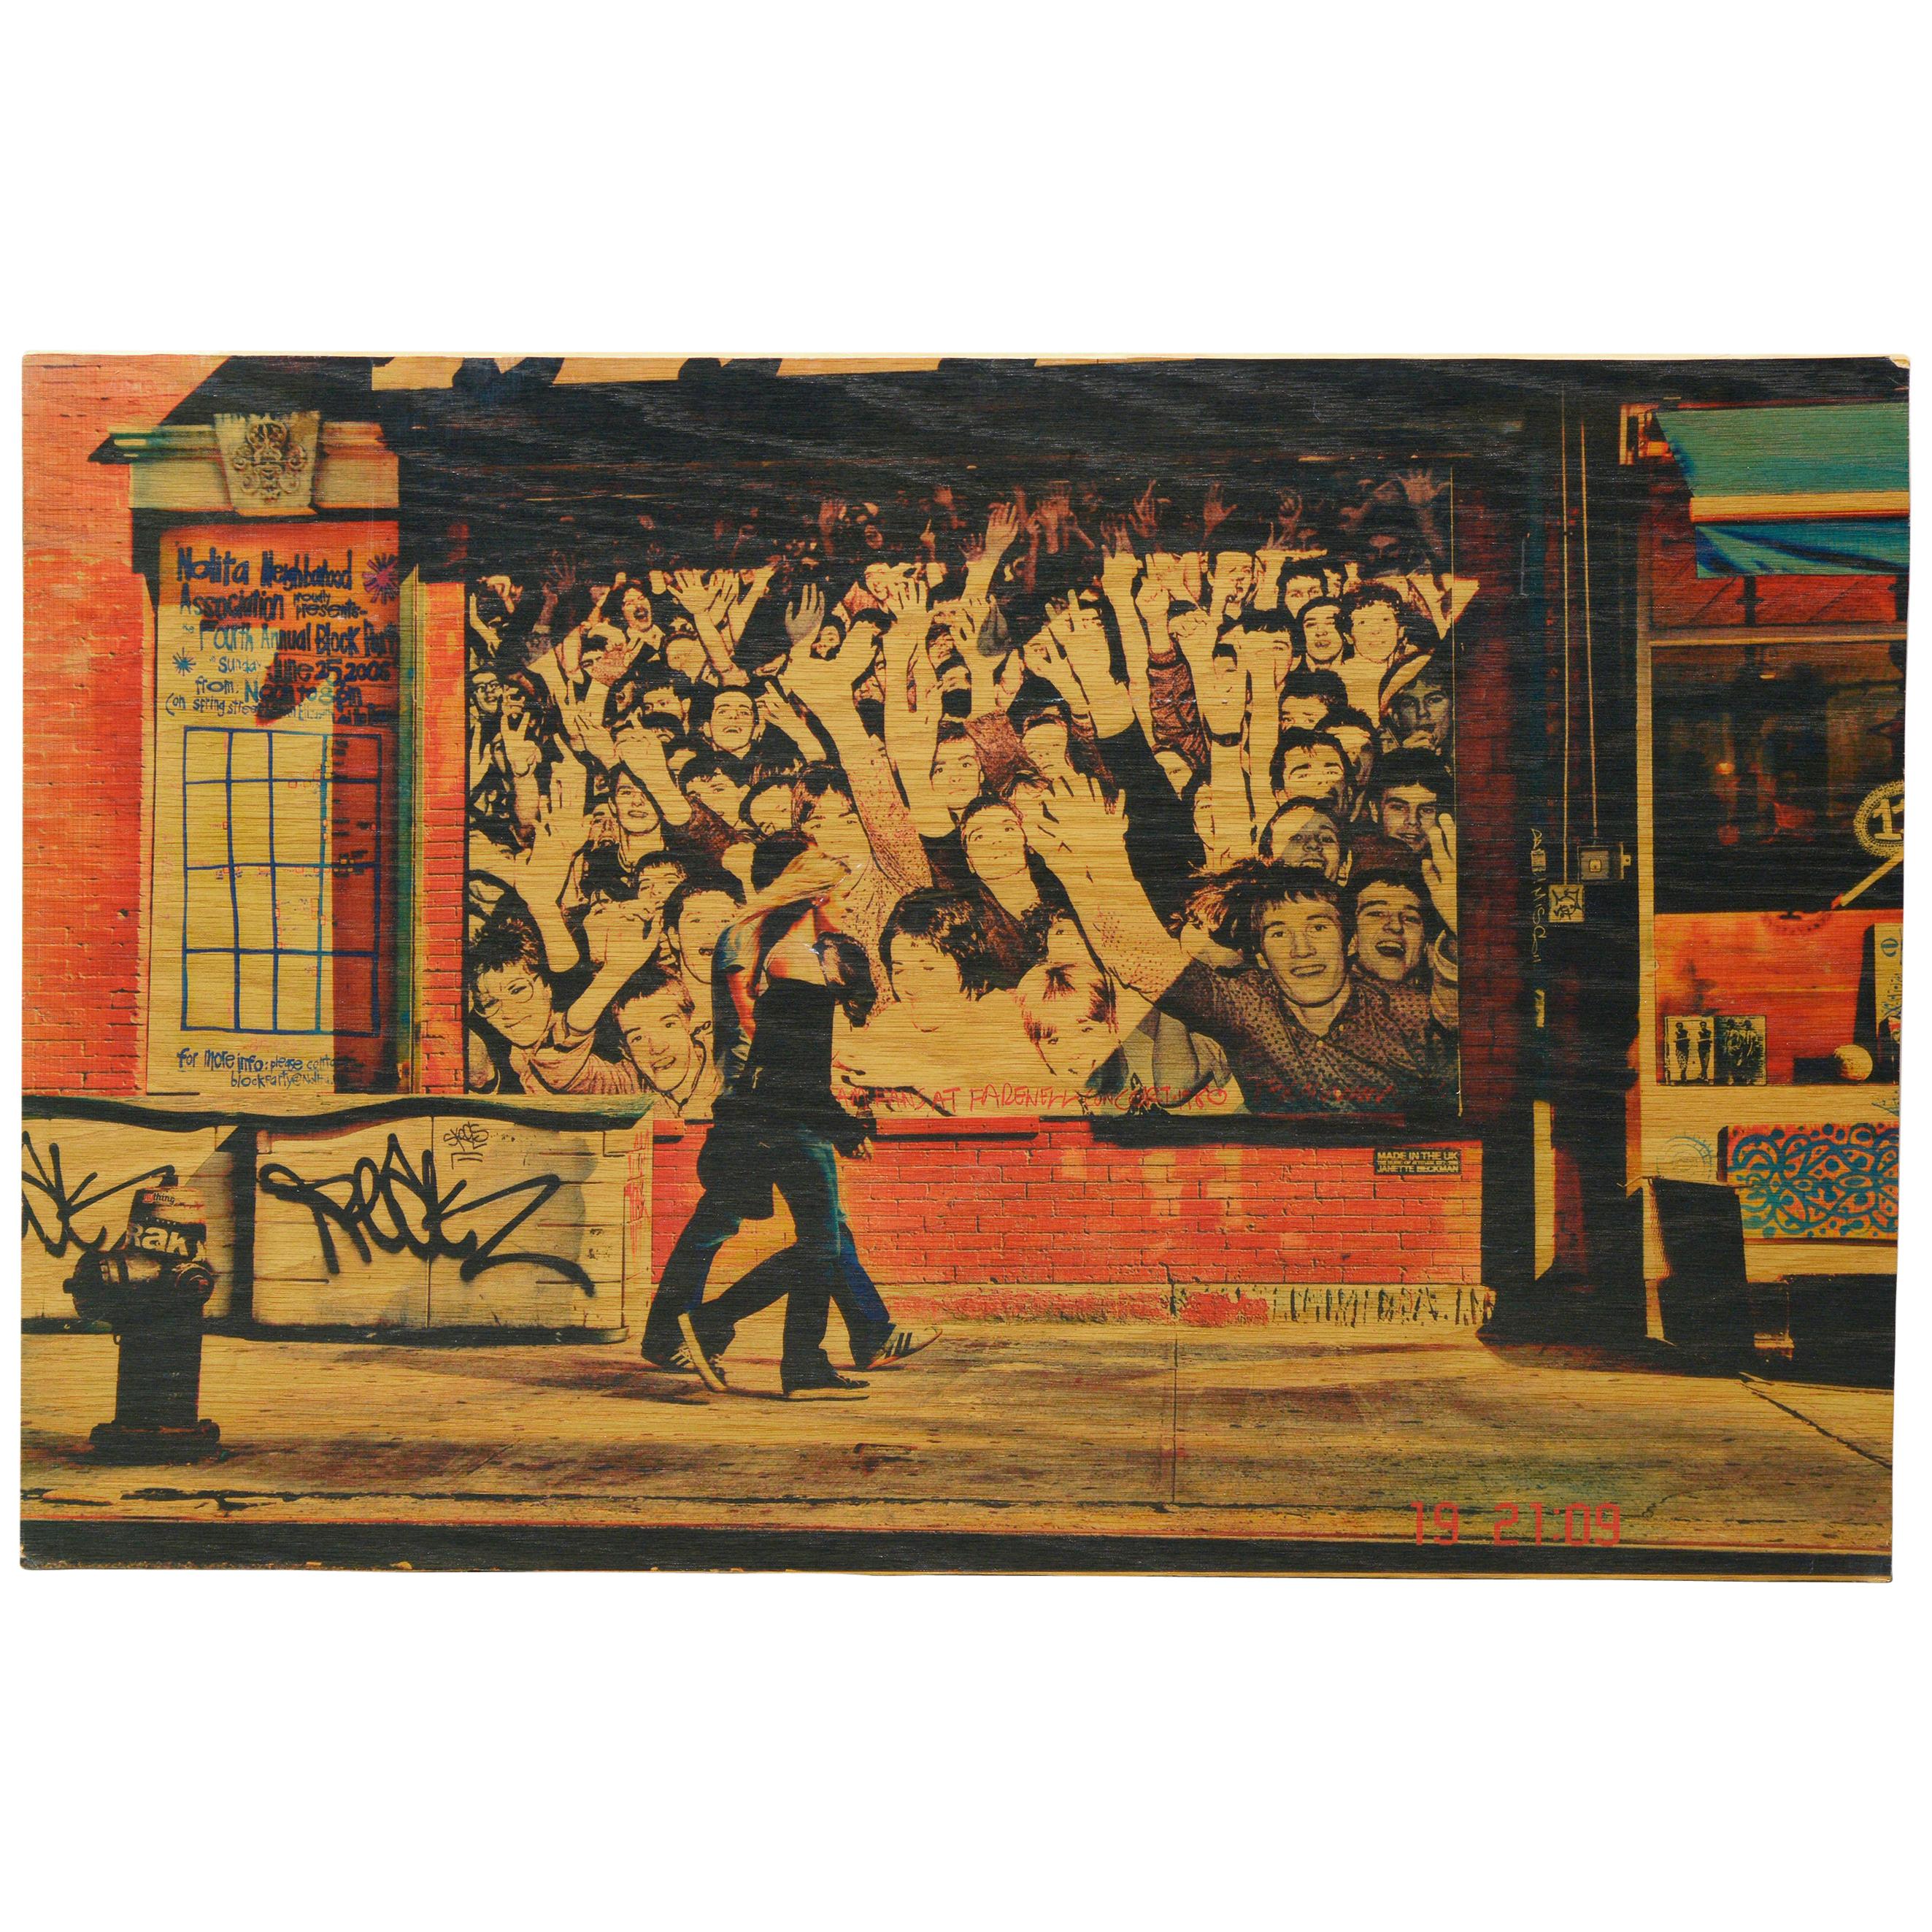 Daniel Siboni "Sidewalk" Street Art, Large Photo on Wood Print